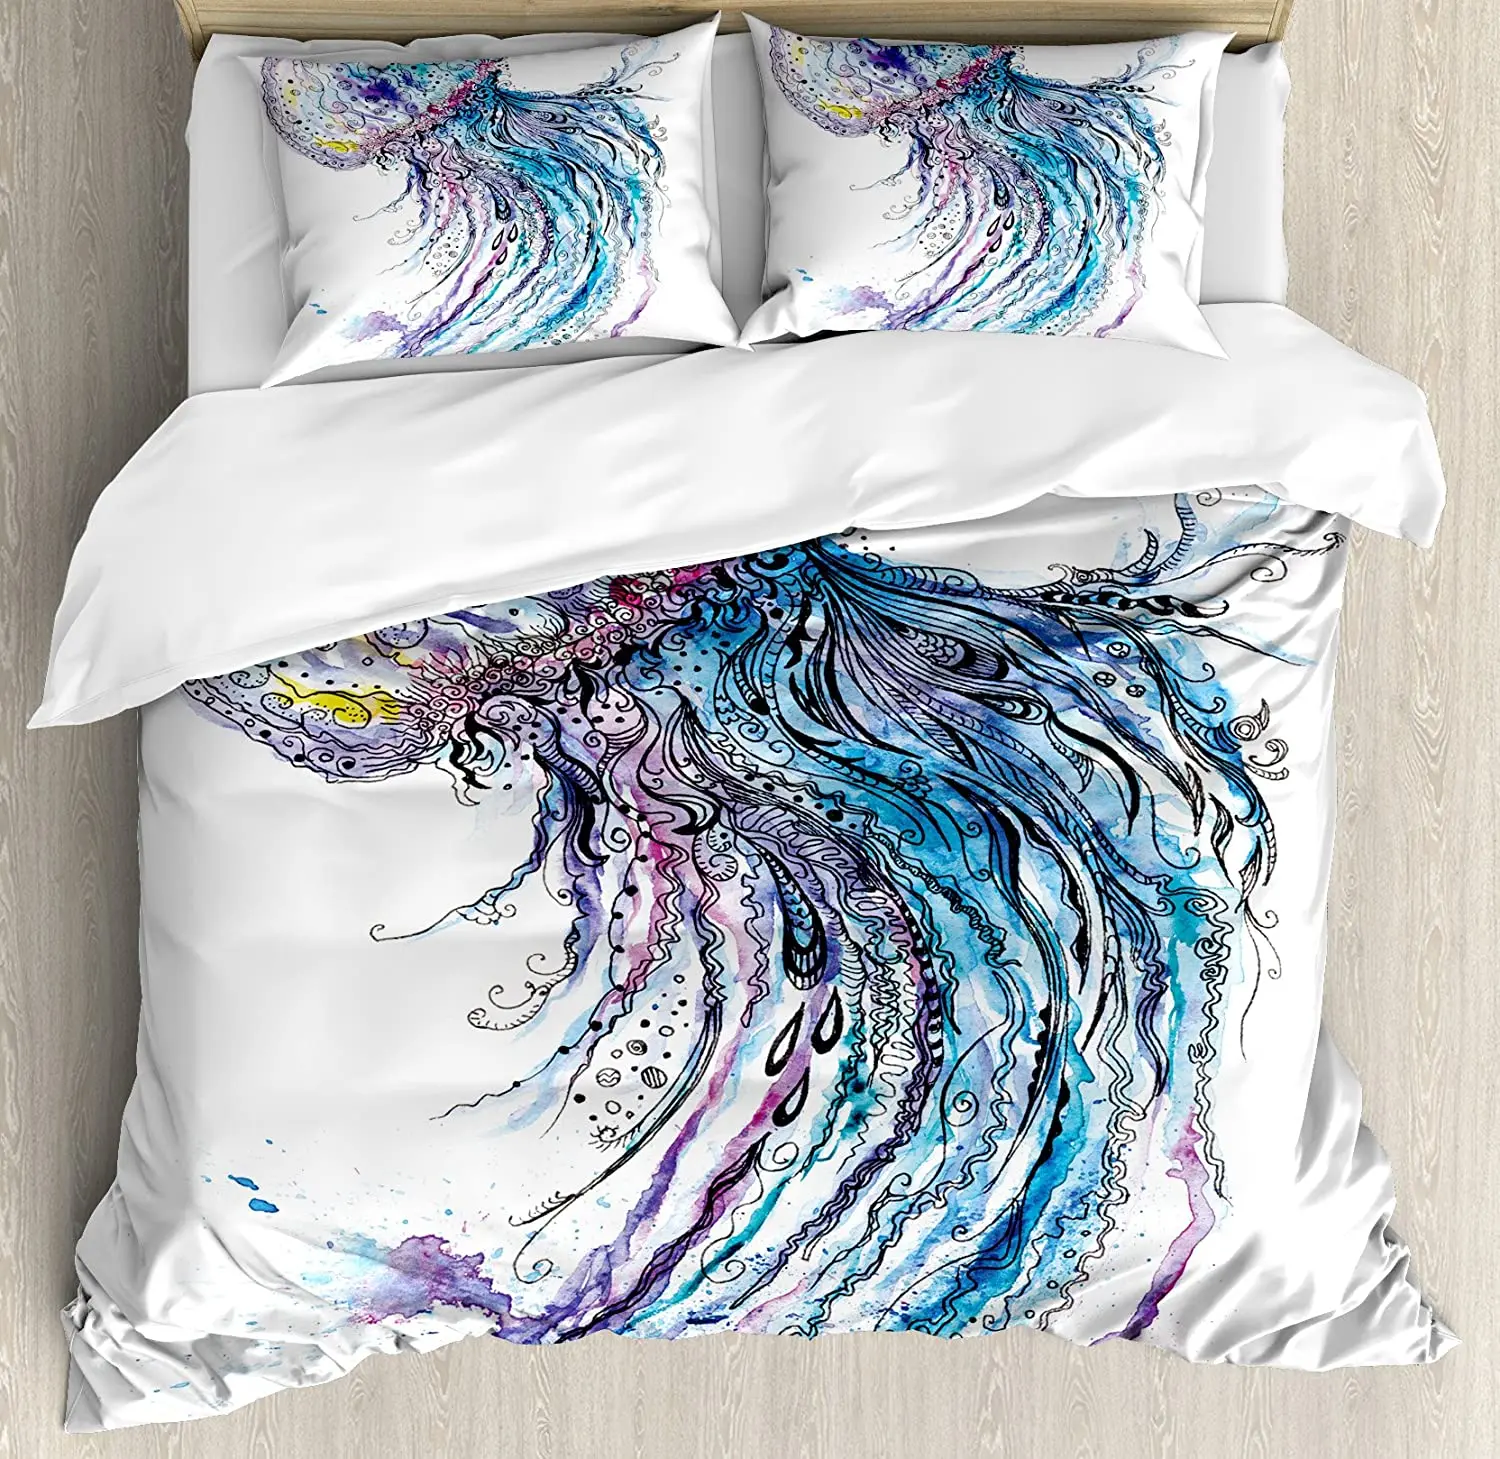 

Jellyfish Duvet Cover Set Aqua Colors Art Ocean Animal Print Sketch Style Creative Sea Marine Theme Bedding Set for Home